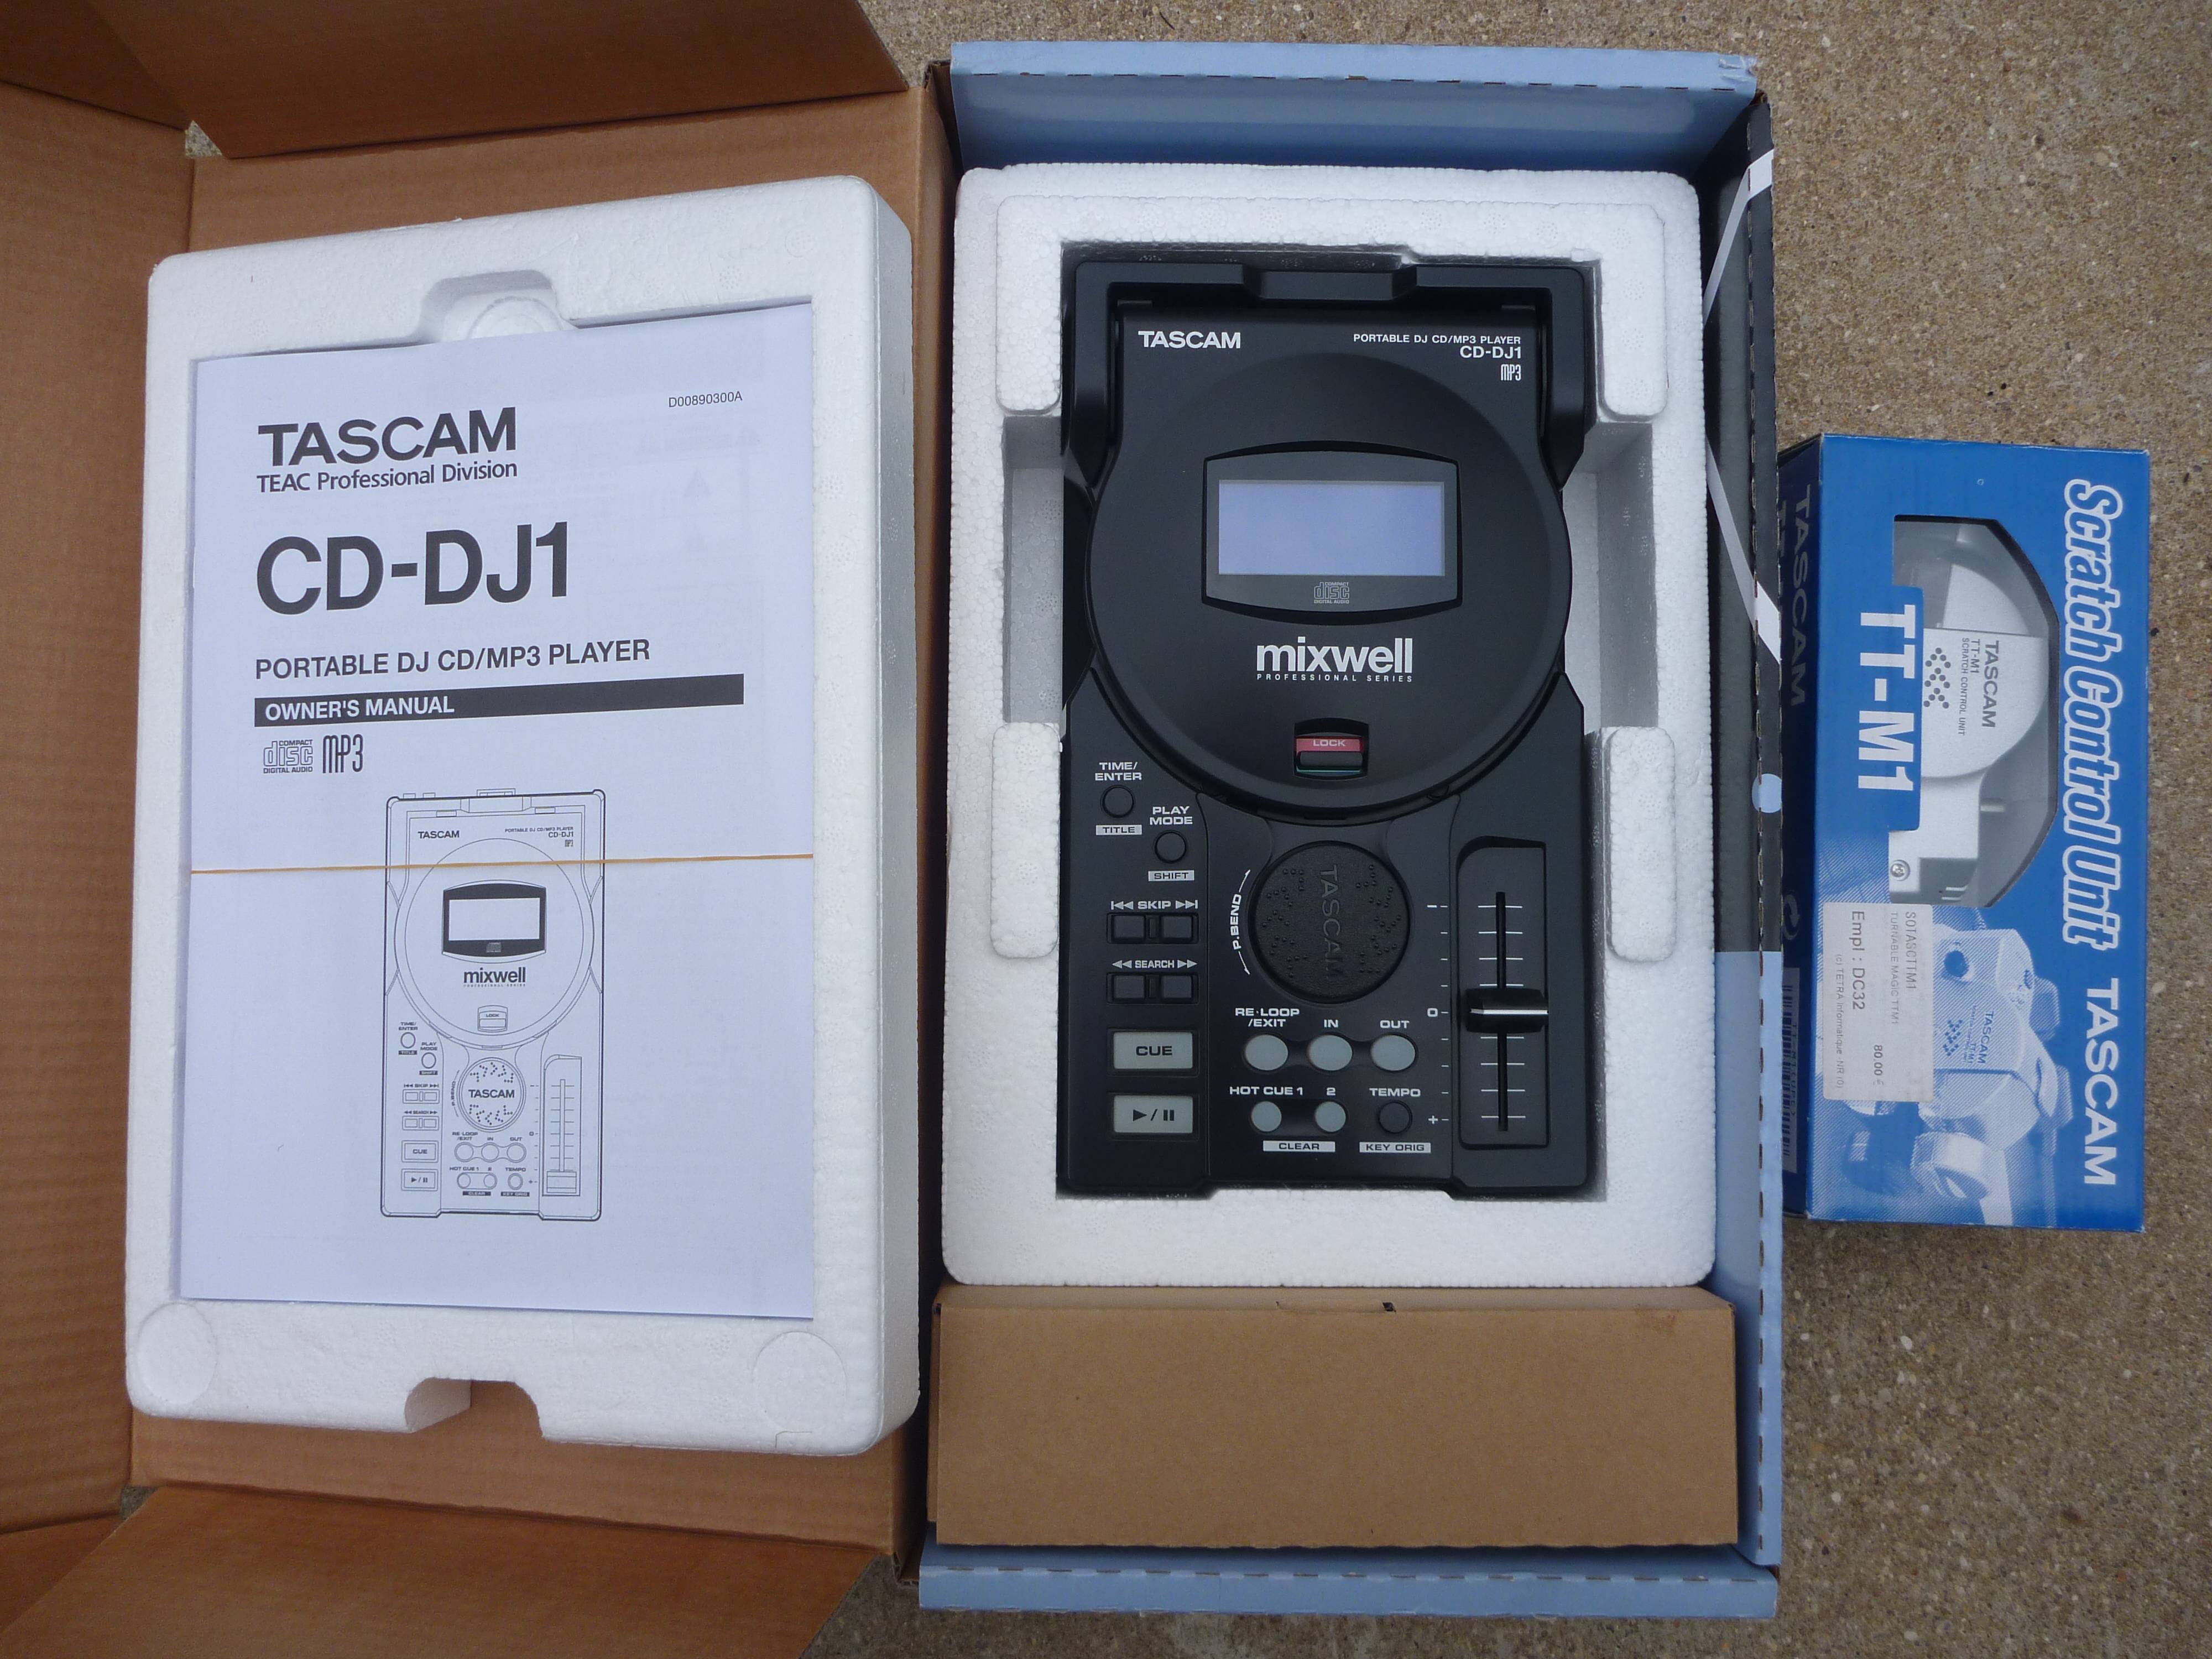 Tascam CD-DJ1